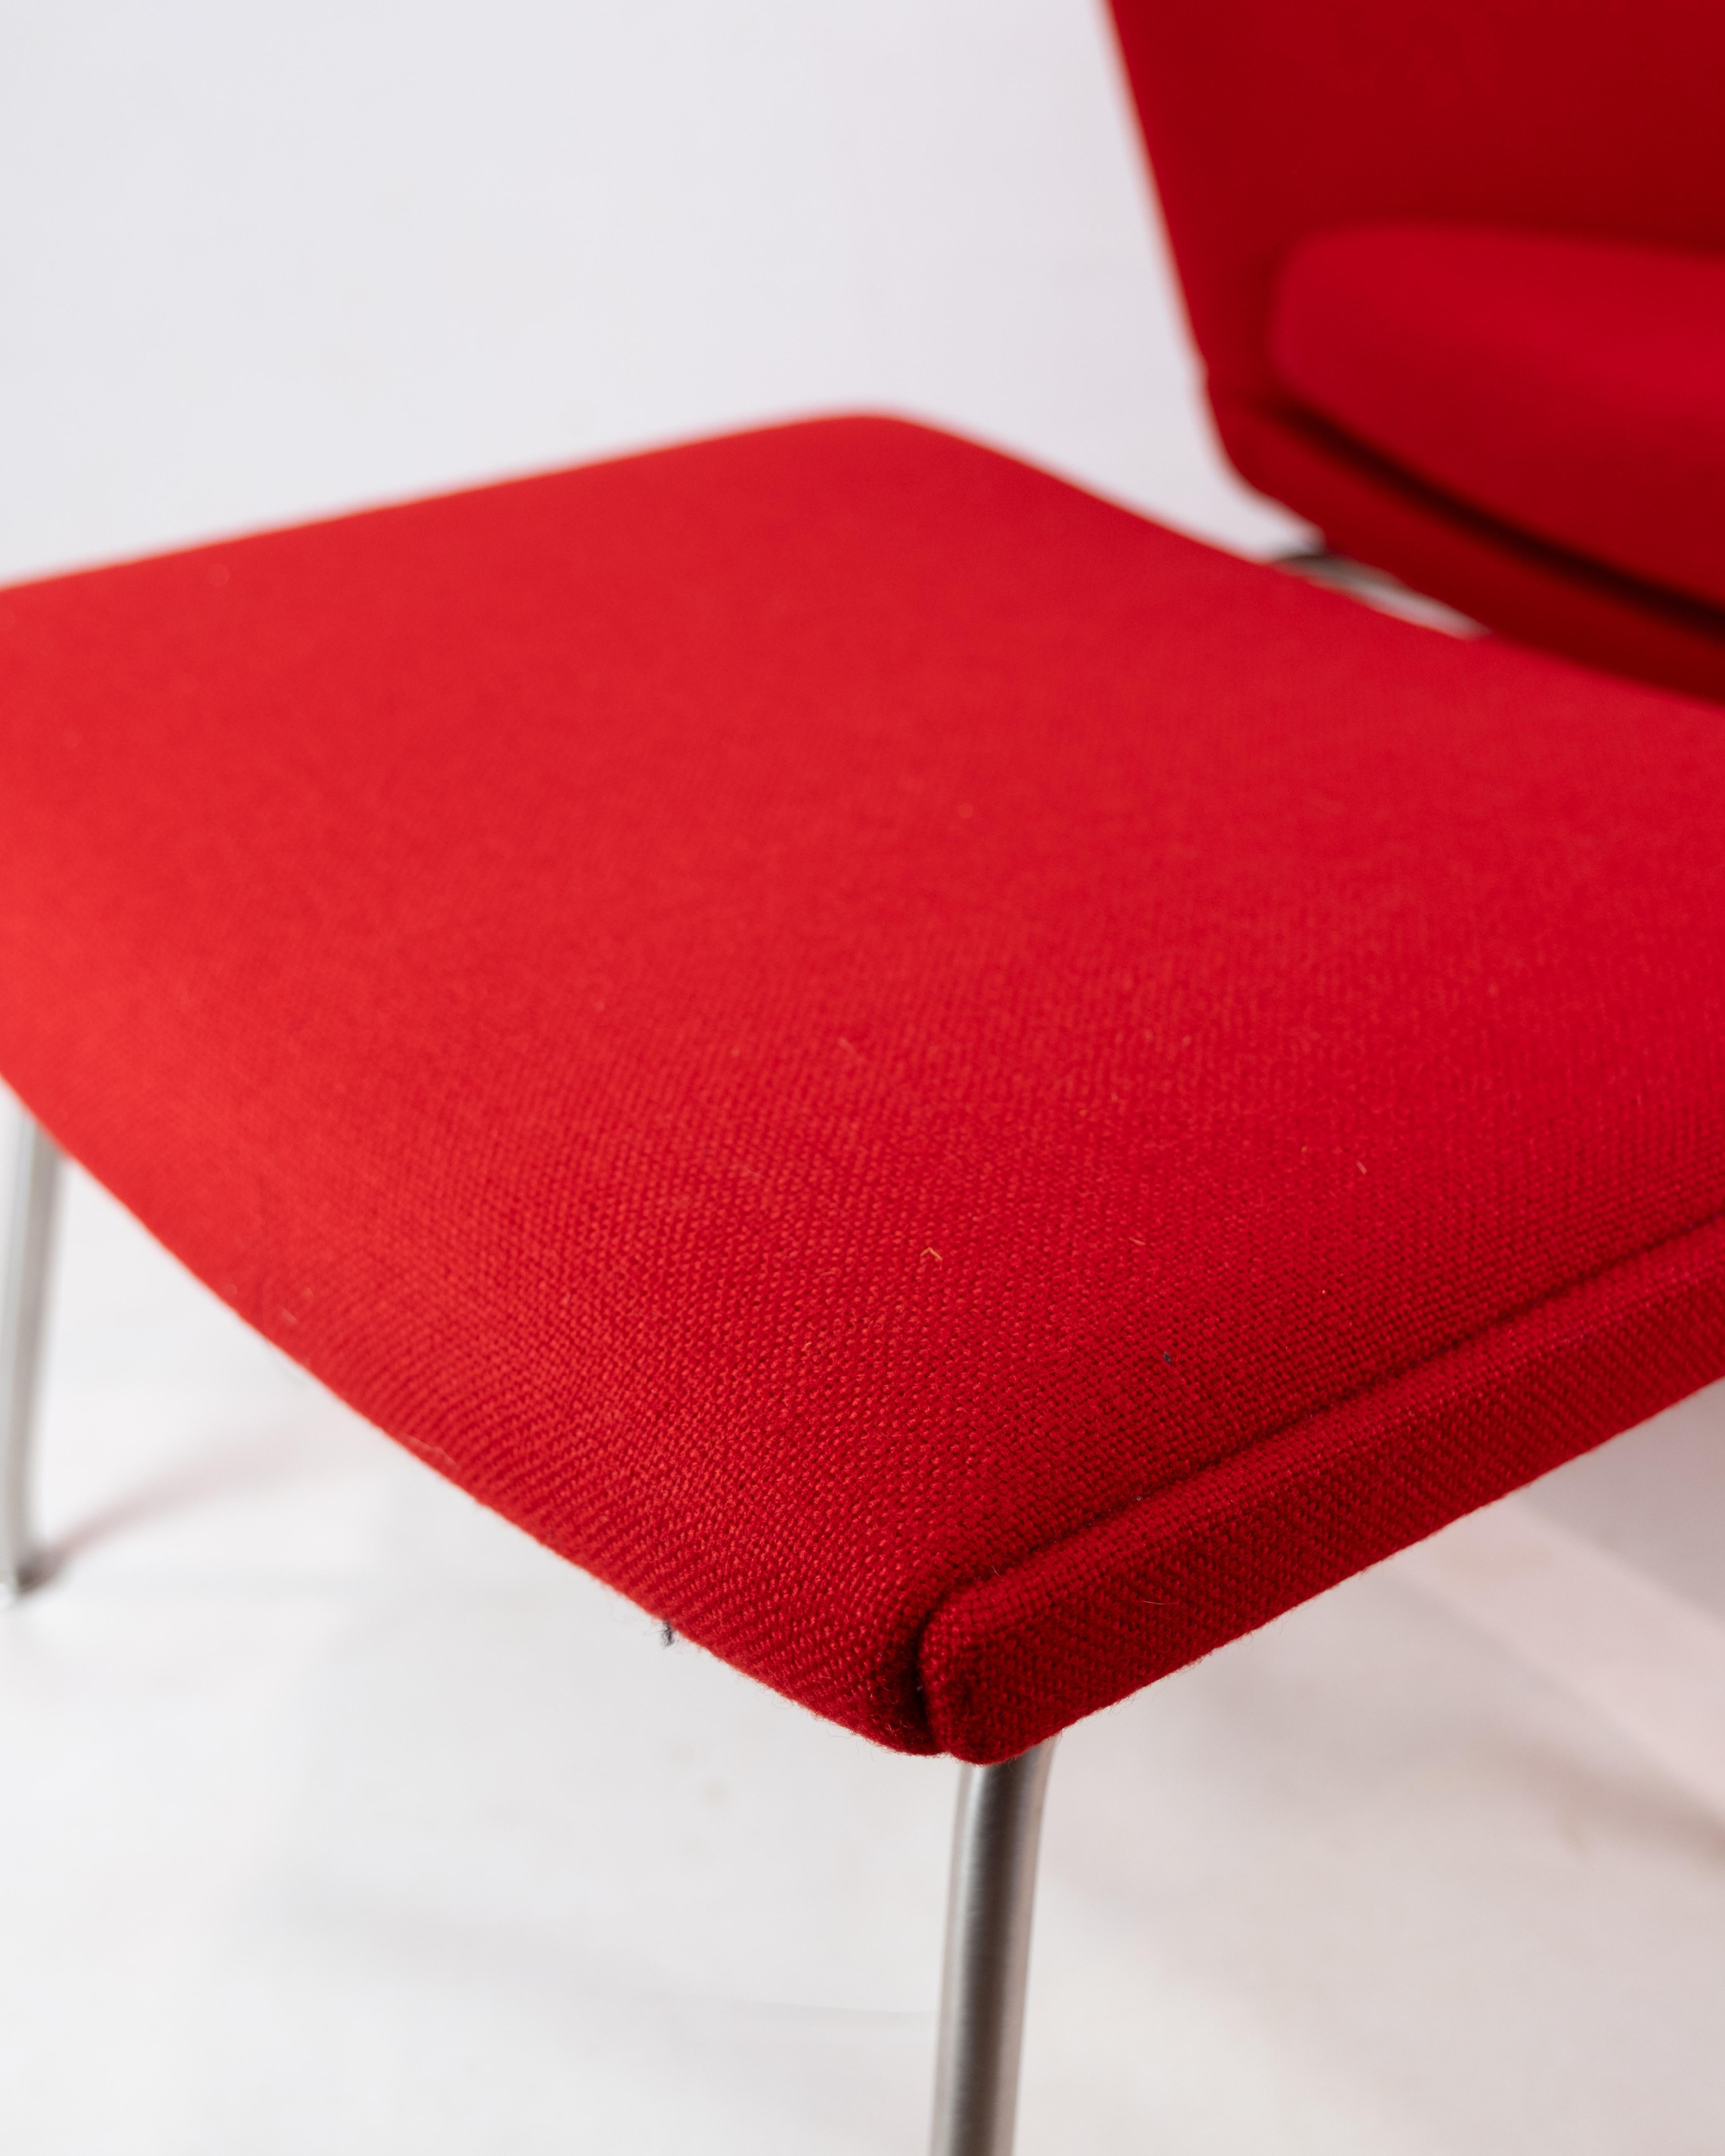 Oculus Chair in Red Hallingdal Fabric Designed By Hans J. Wegner  4